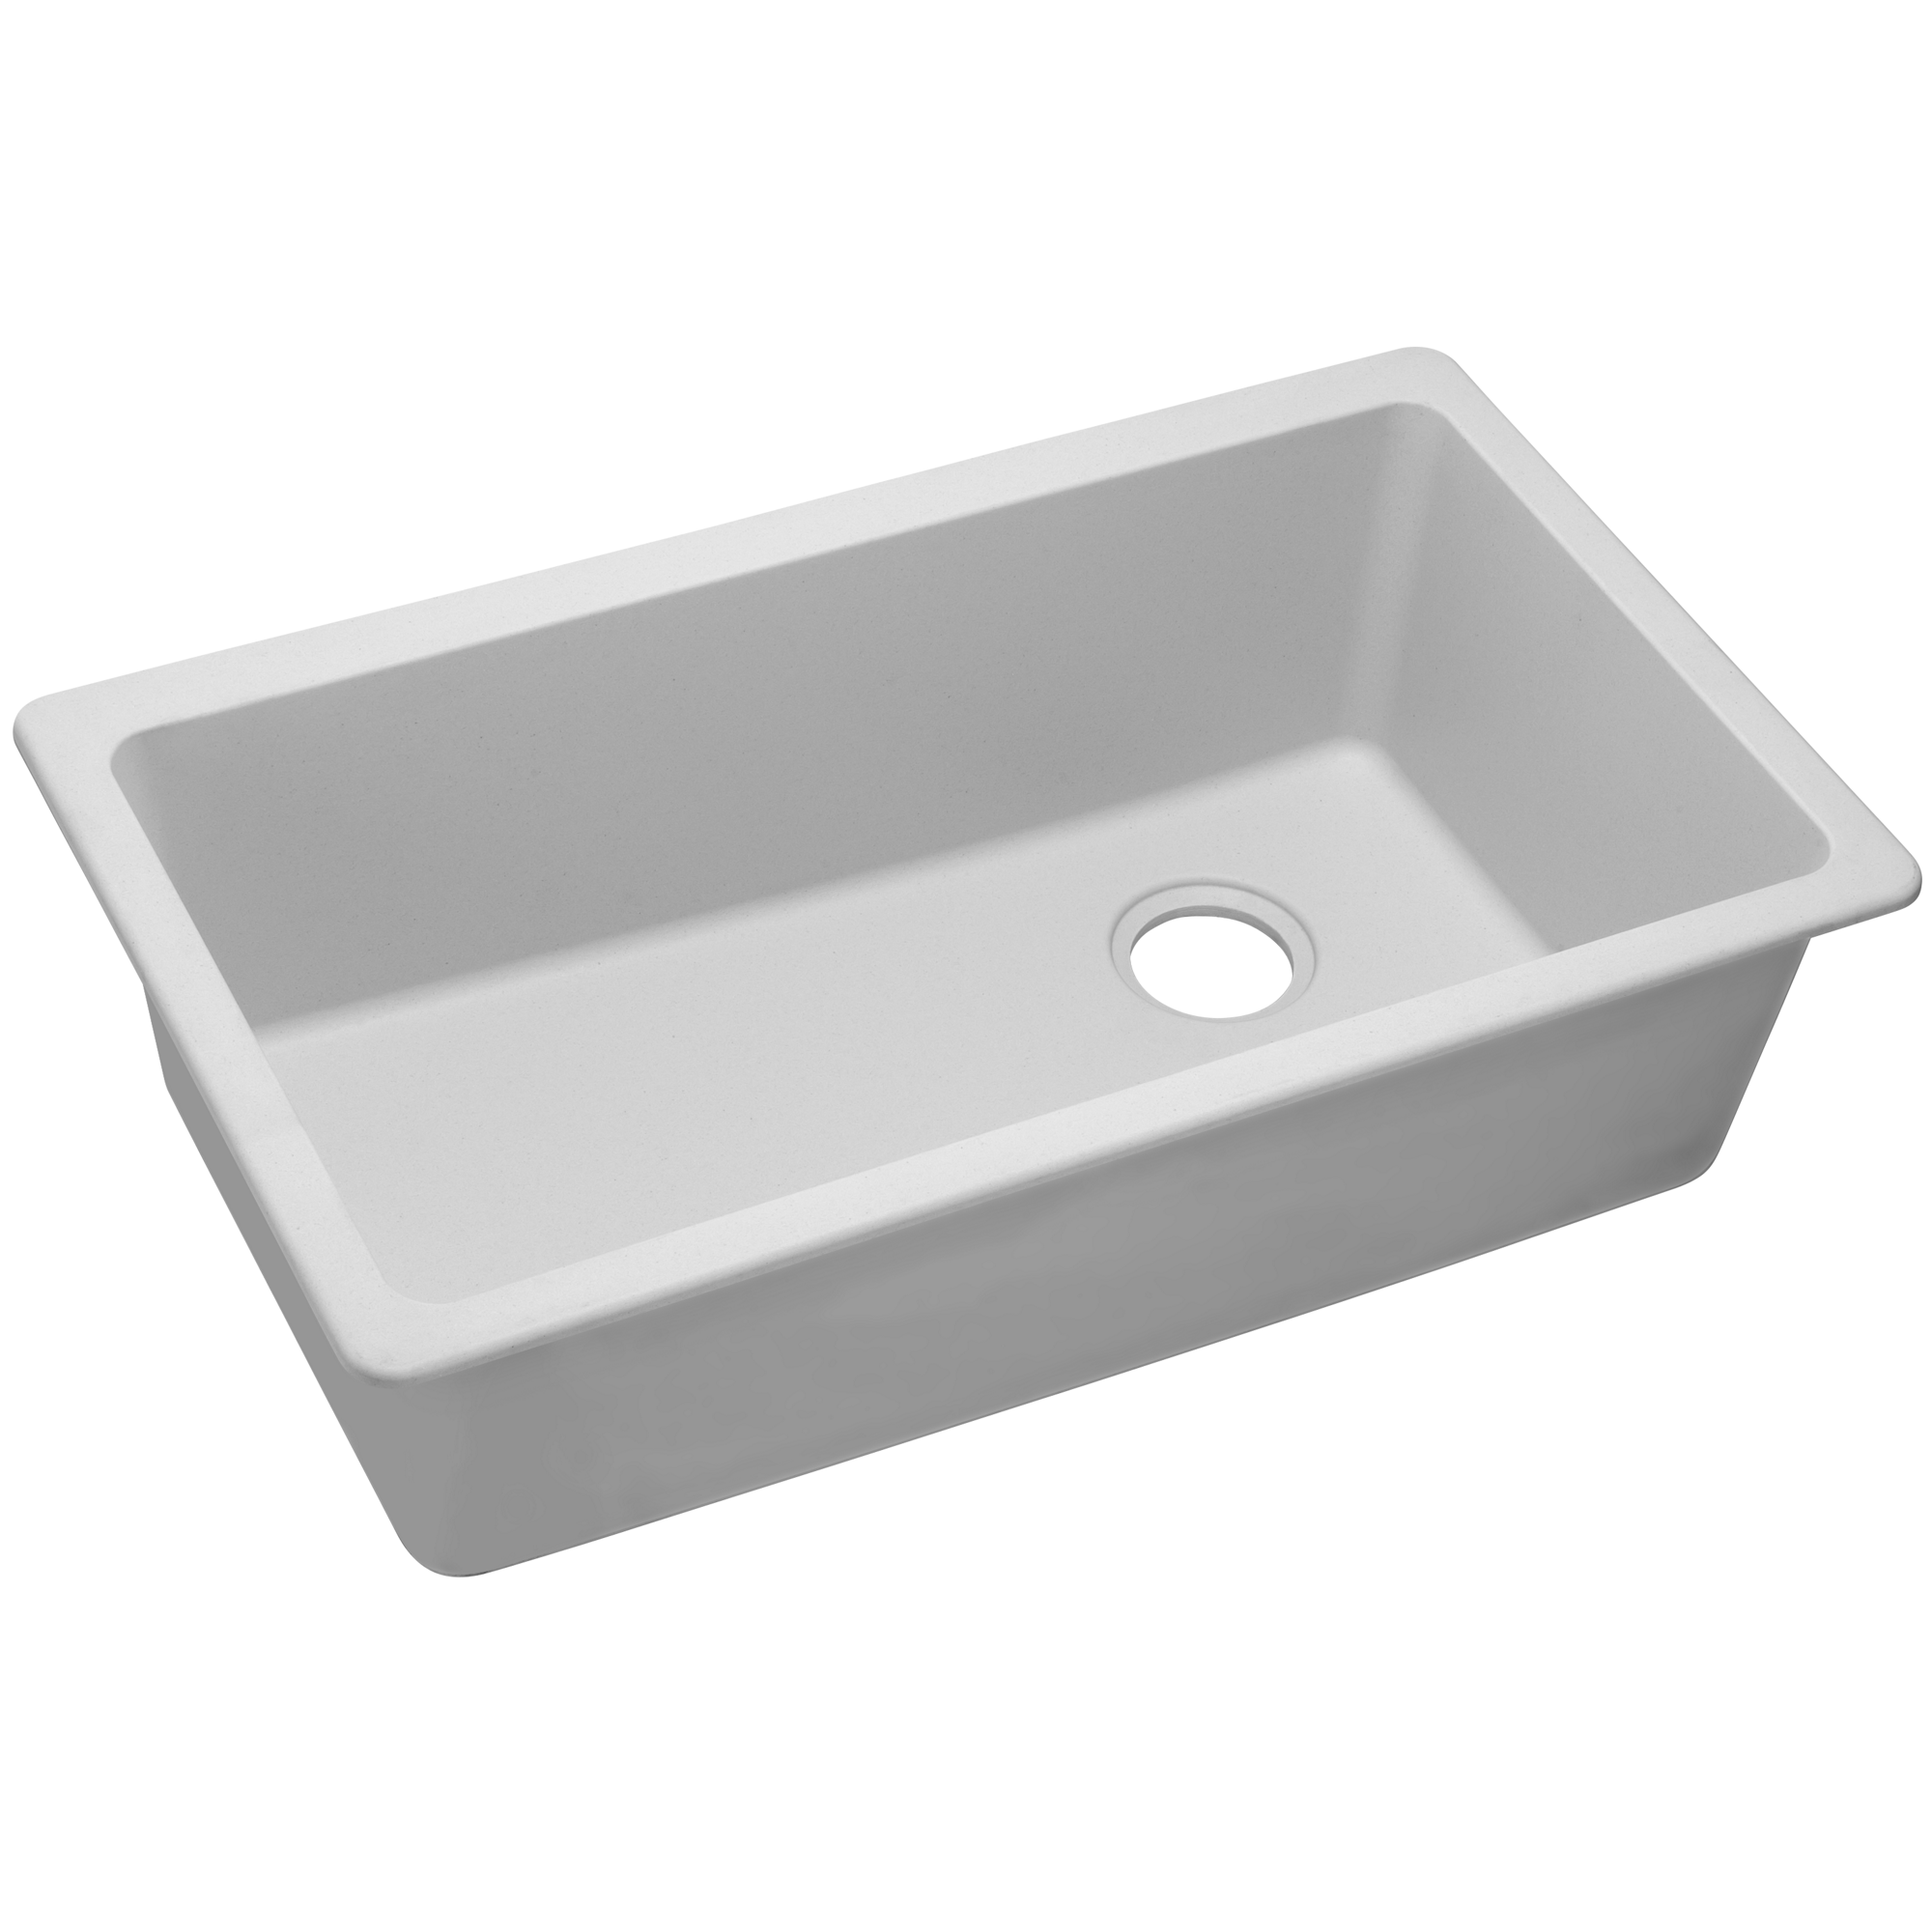 Quartz Classic 33x18-3/4x9-1/2" Single Bowl Sink in White